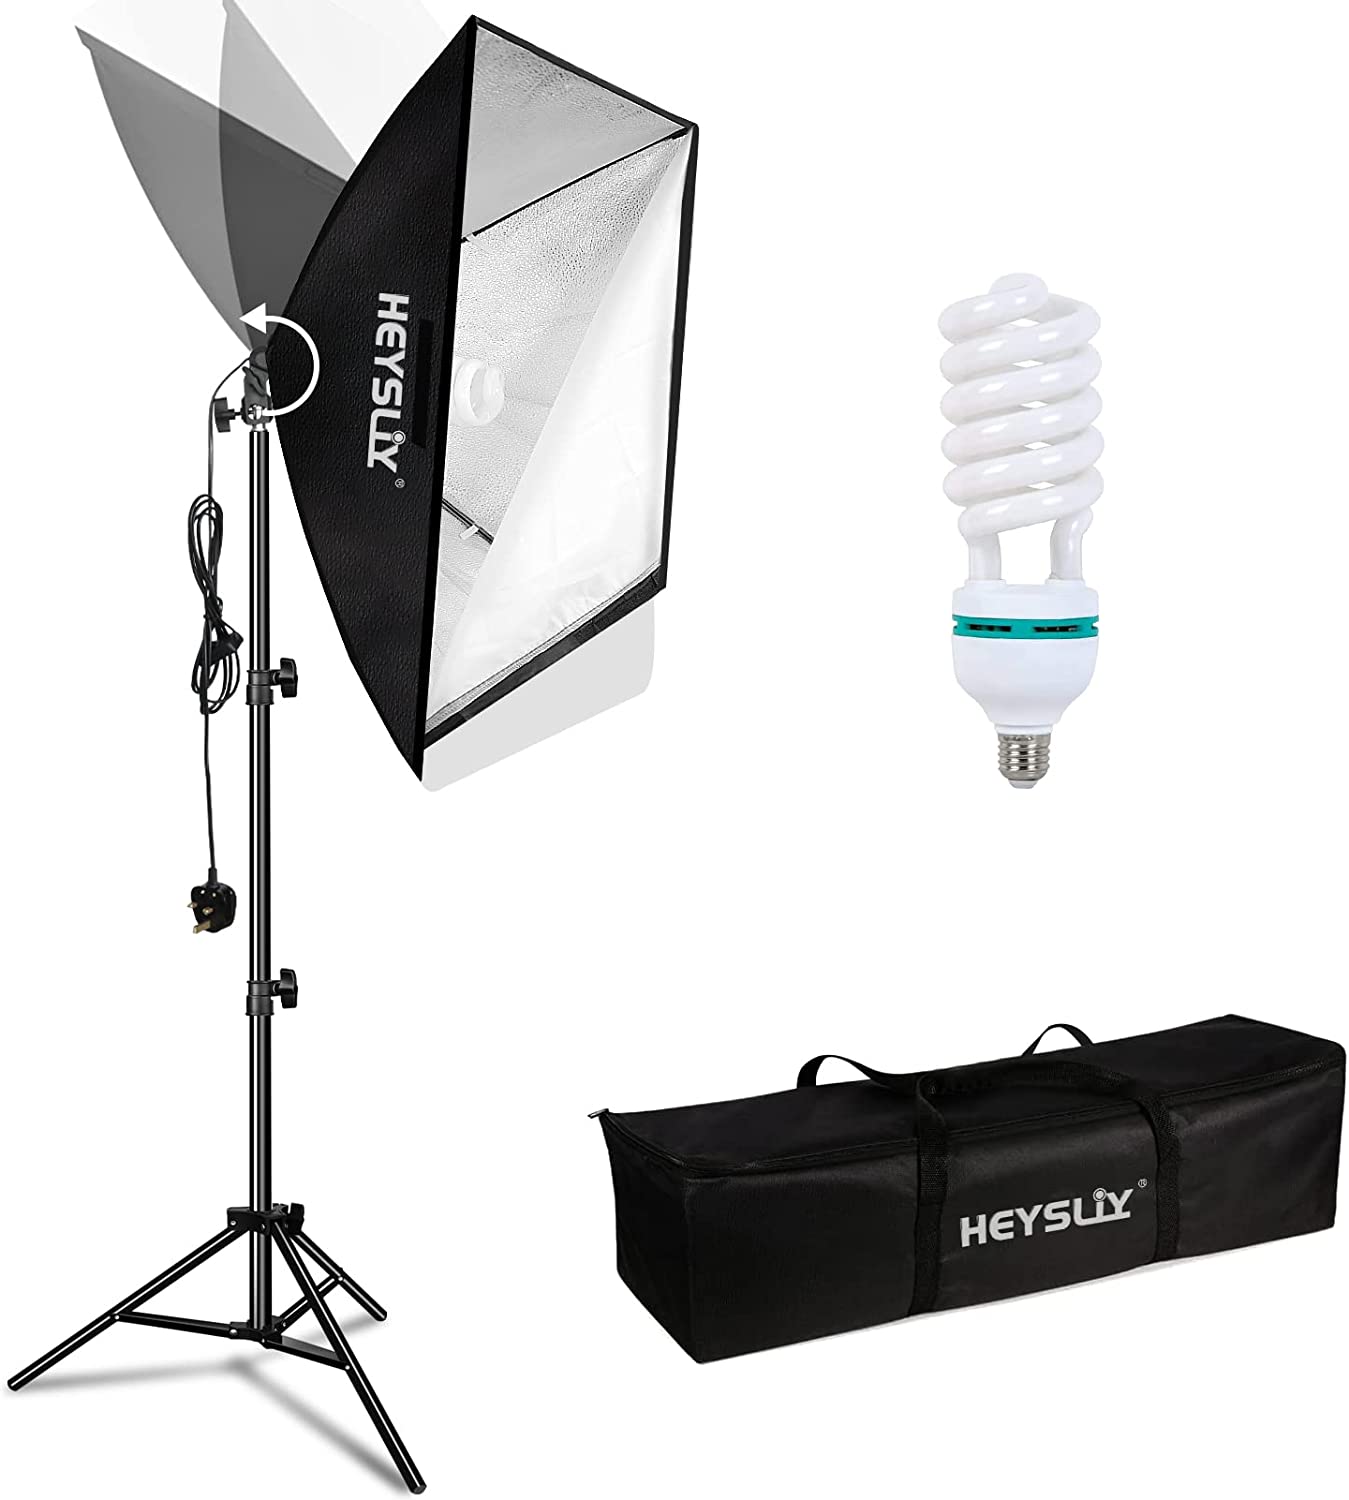 centeret Tilbagekaldelse Theseus Heysliy Softbox Photography Lighting Kit 50x70cm, Studio Light with 15